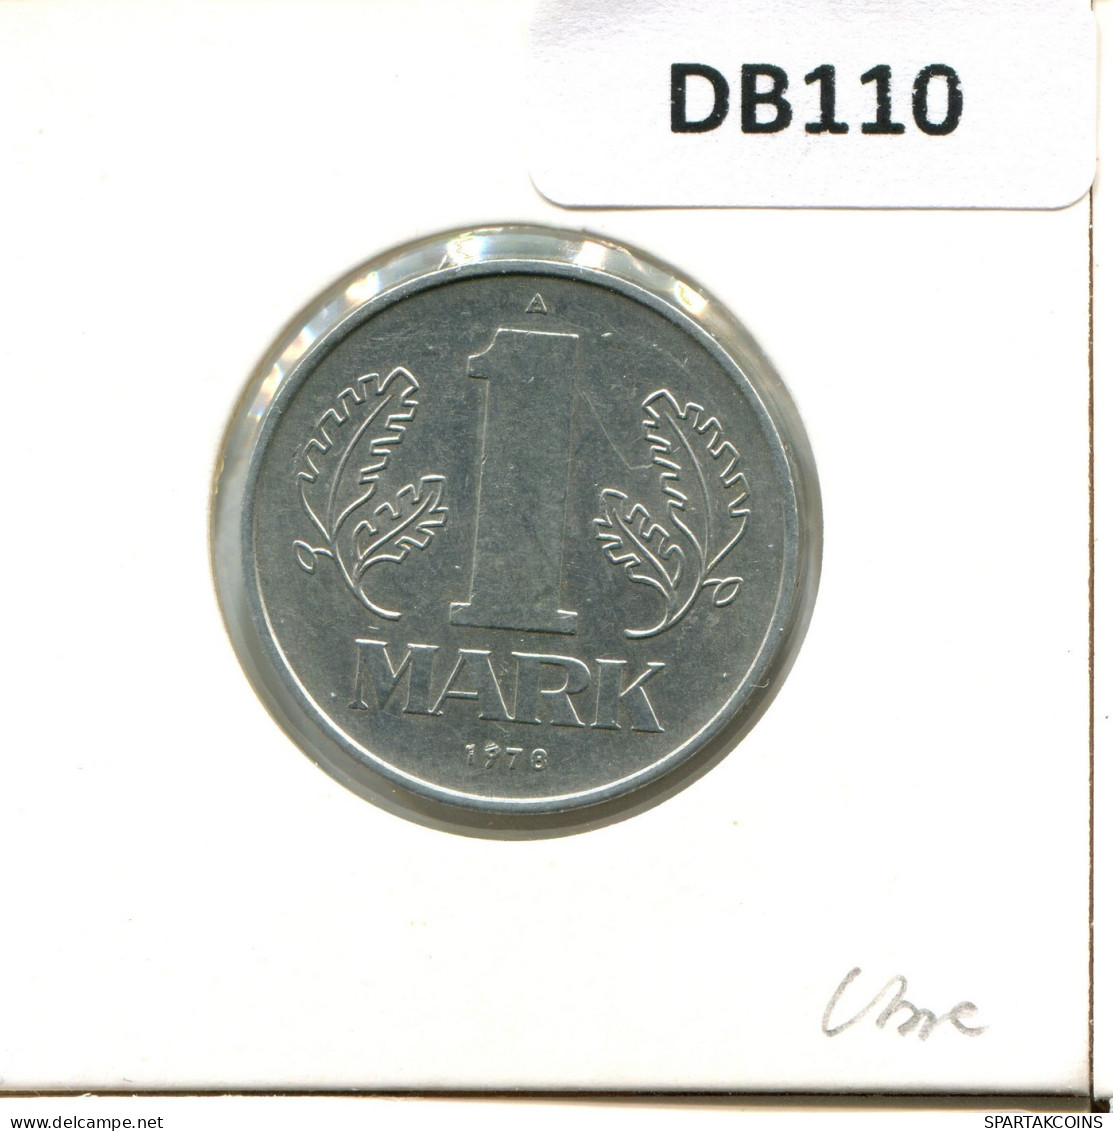 1 MARK 1978 A DDR EAST ALEMANIA Moneda GERMANY #DB110.E.A - 1 Marco